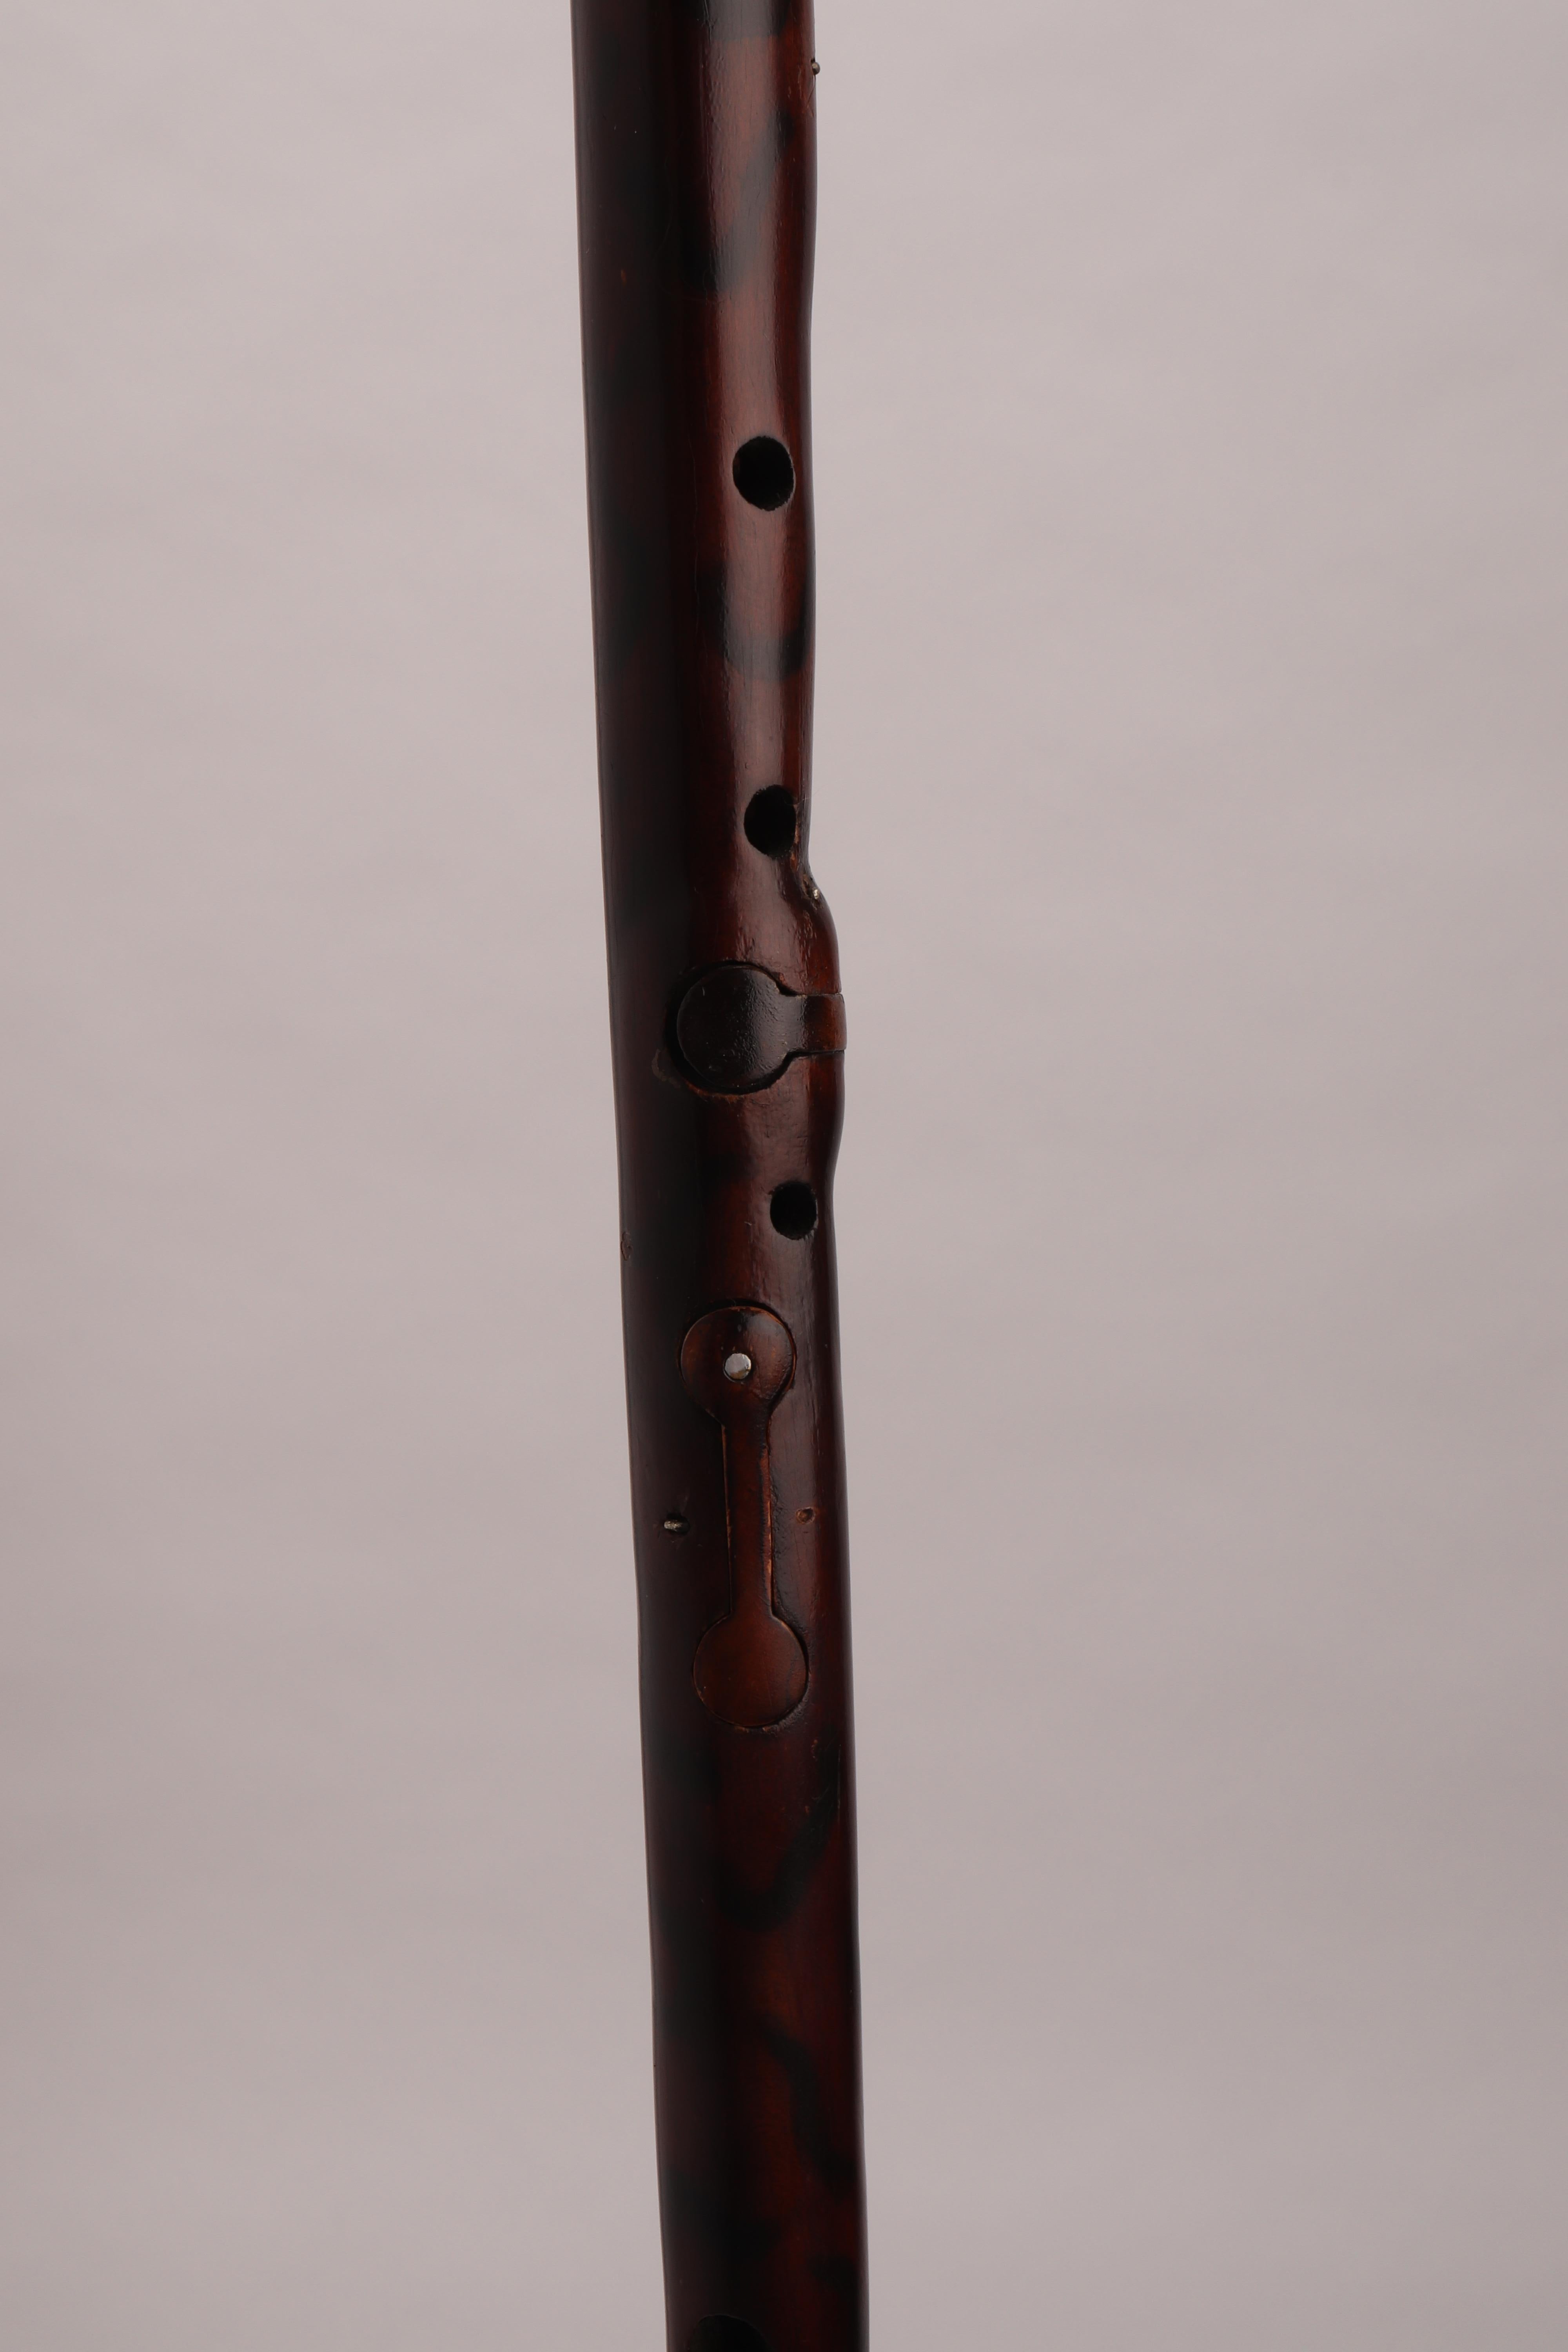 flute stick